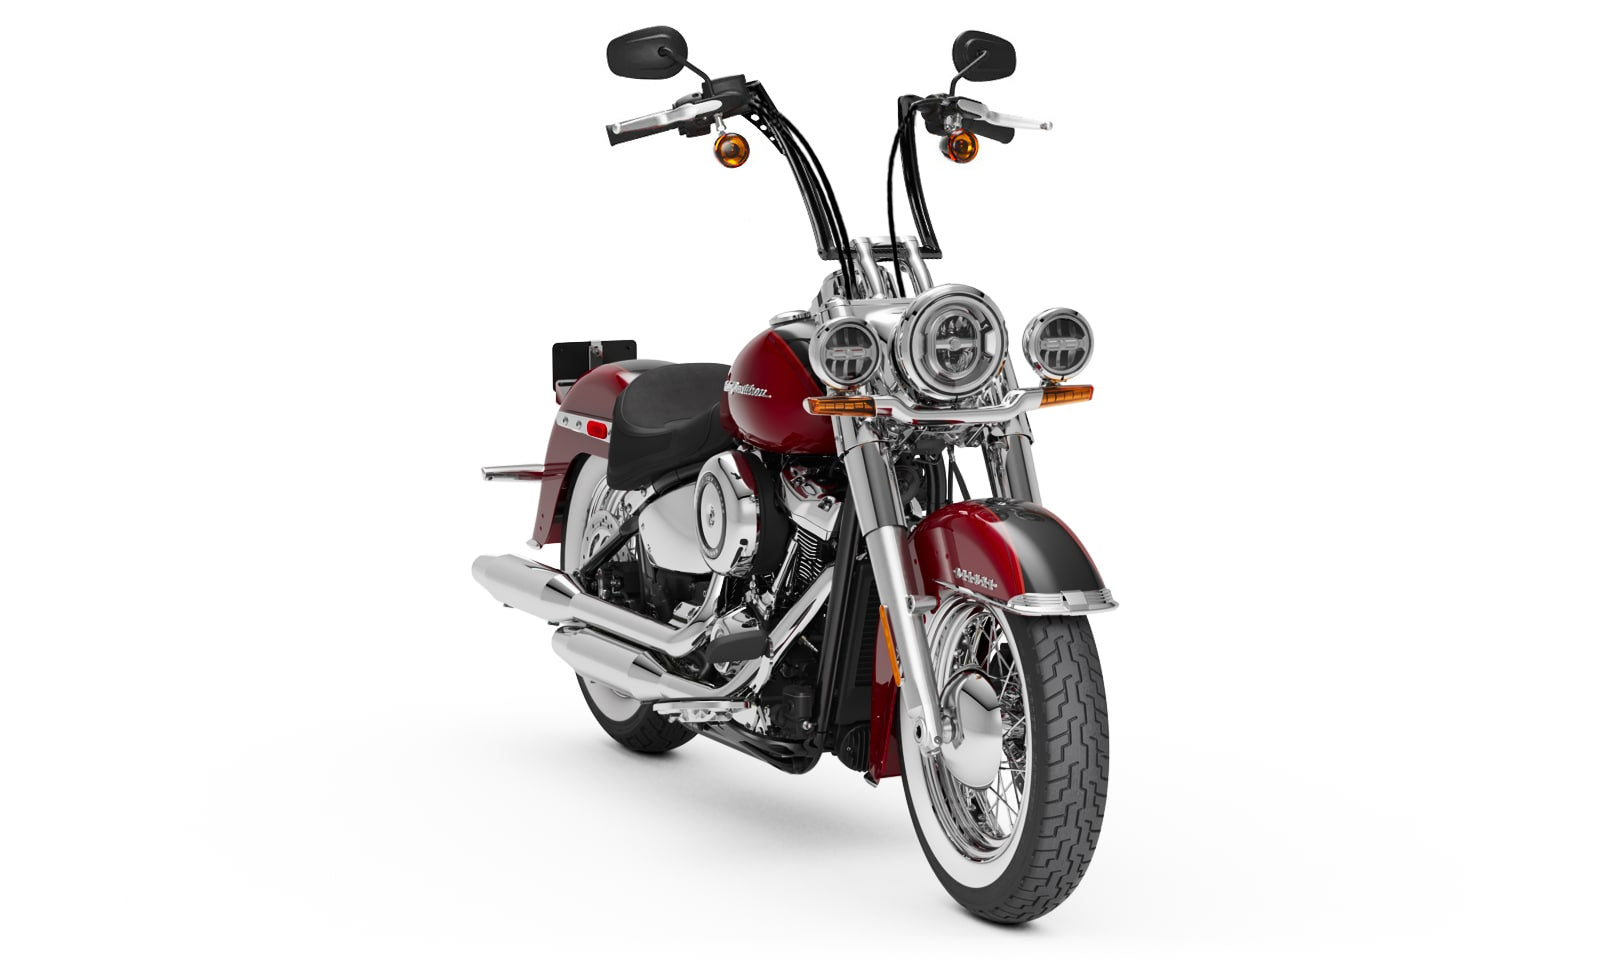 Viking Iron Born 12" Handlebar For Harley Softail Deluxe FLSTN Gloss Black Bag on Bike View @expand